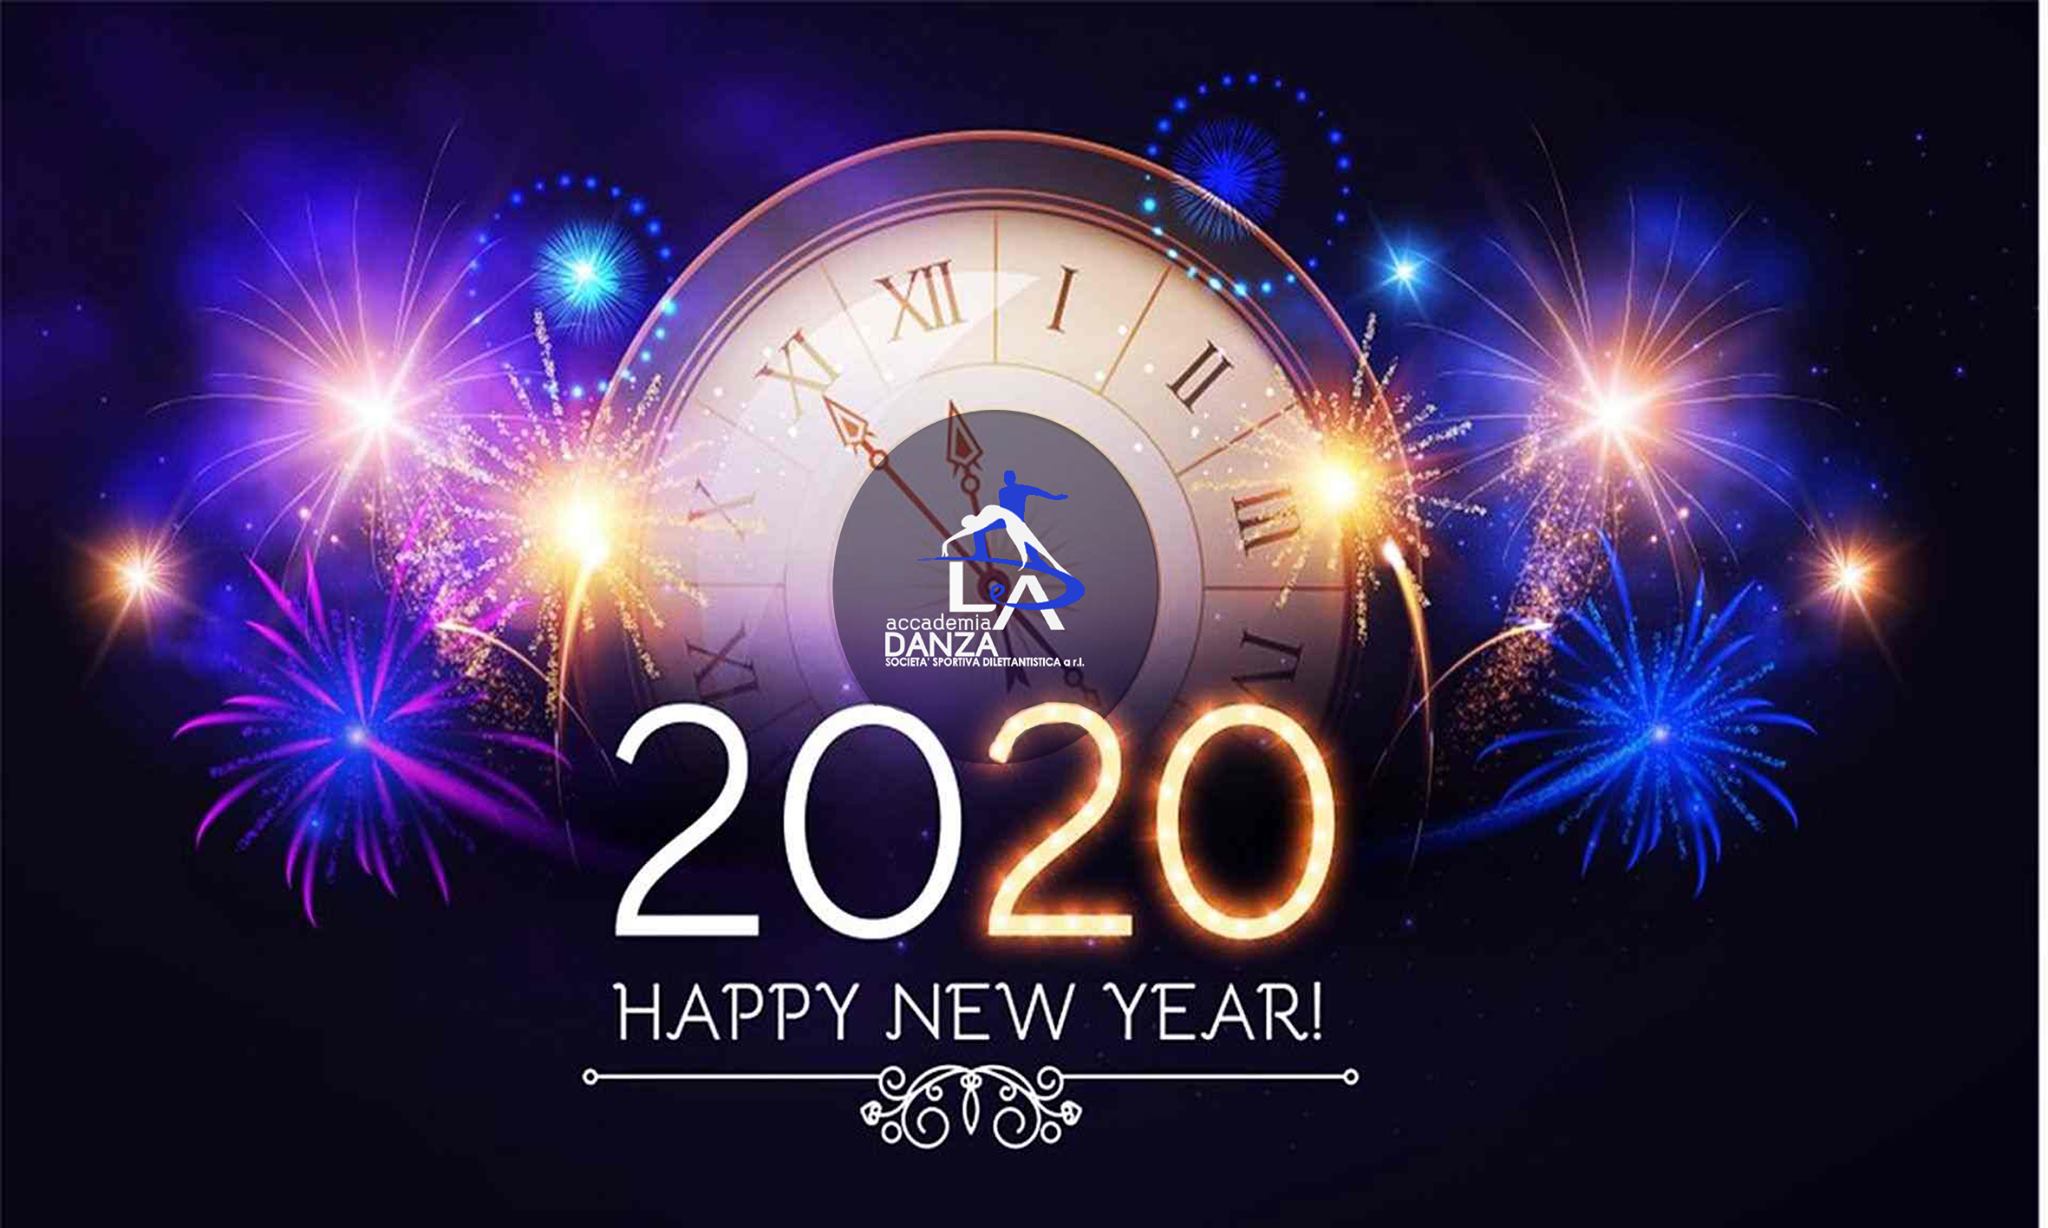 Happy new live. Новый год 2020 год. Happy New year картинки. Happy New year 2020. C yjdsv 2020 ujjv.